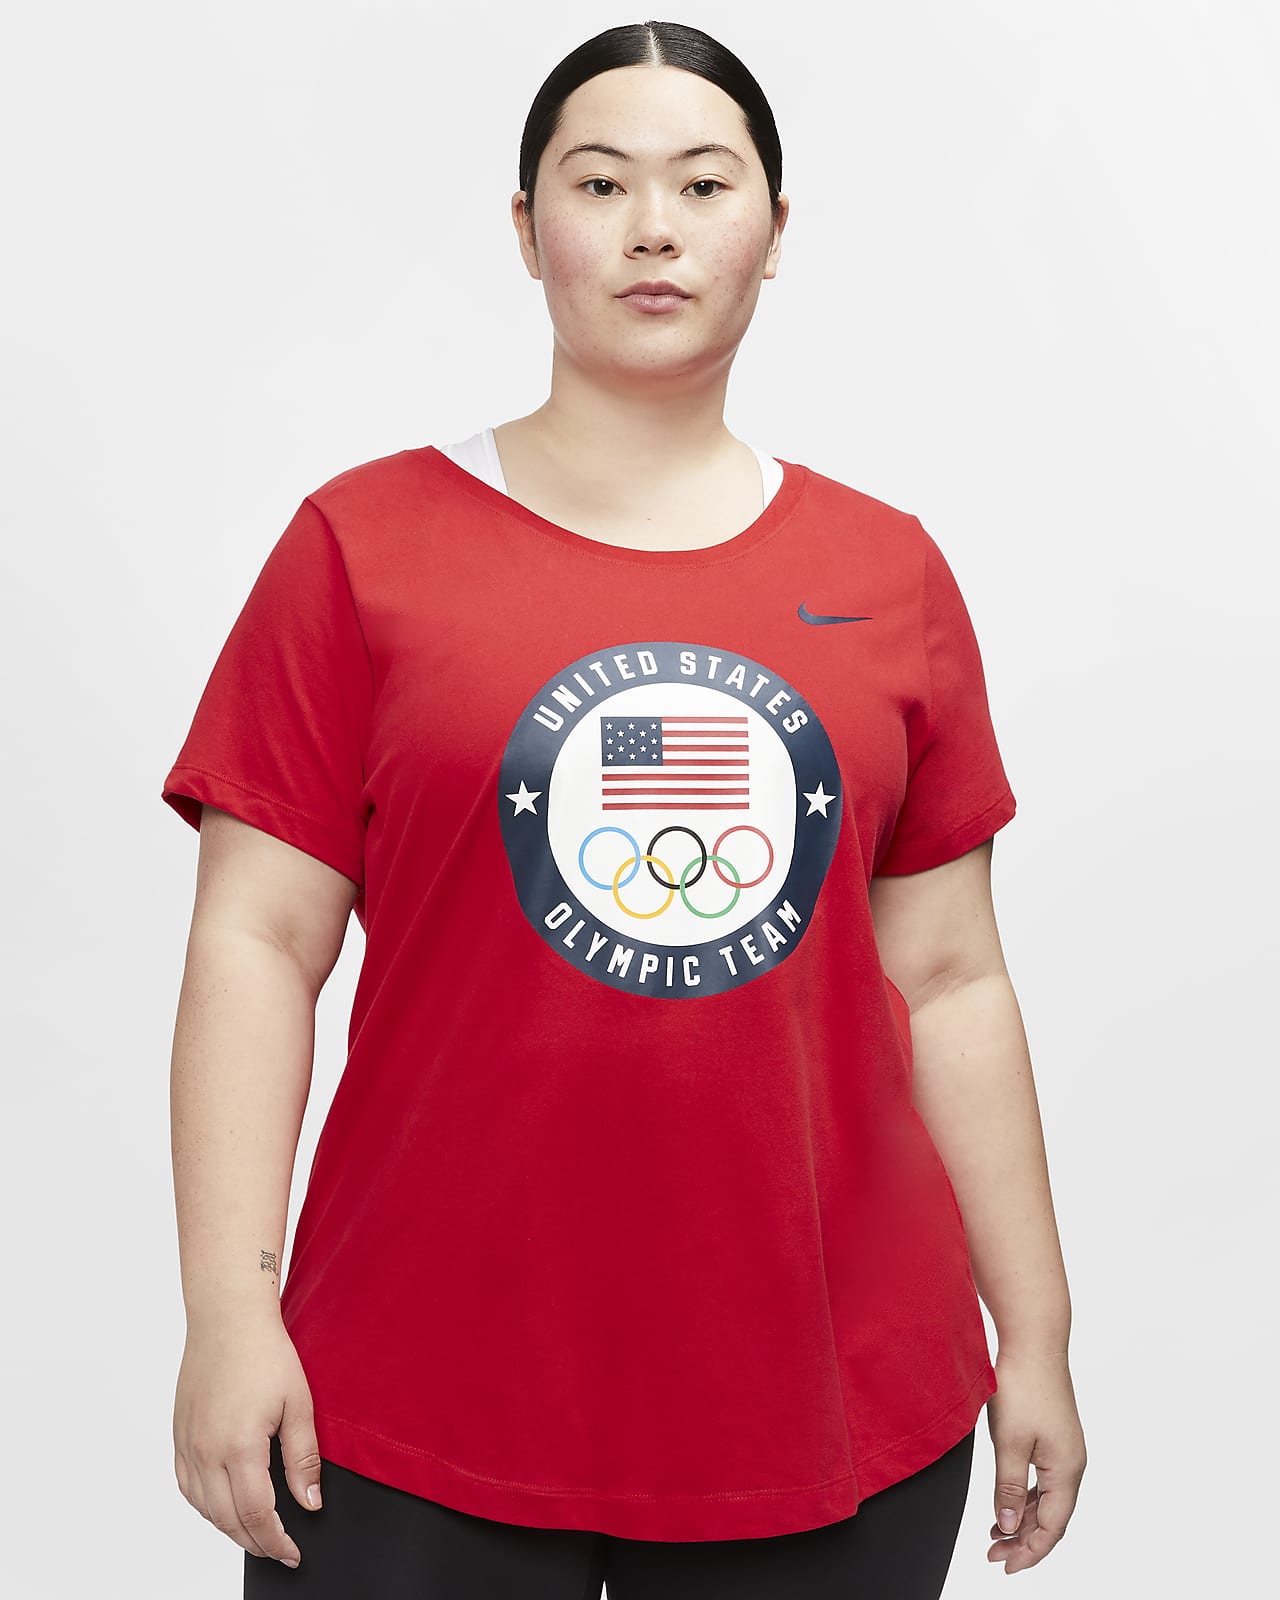 Team USA Women's T-Shirt (Plus Size).